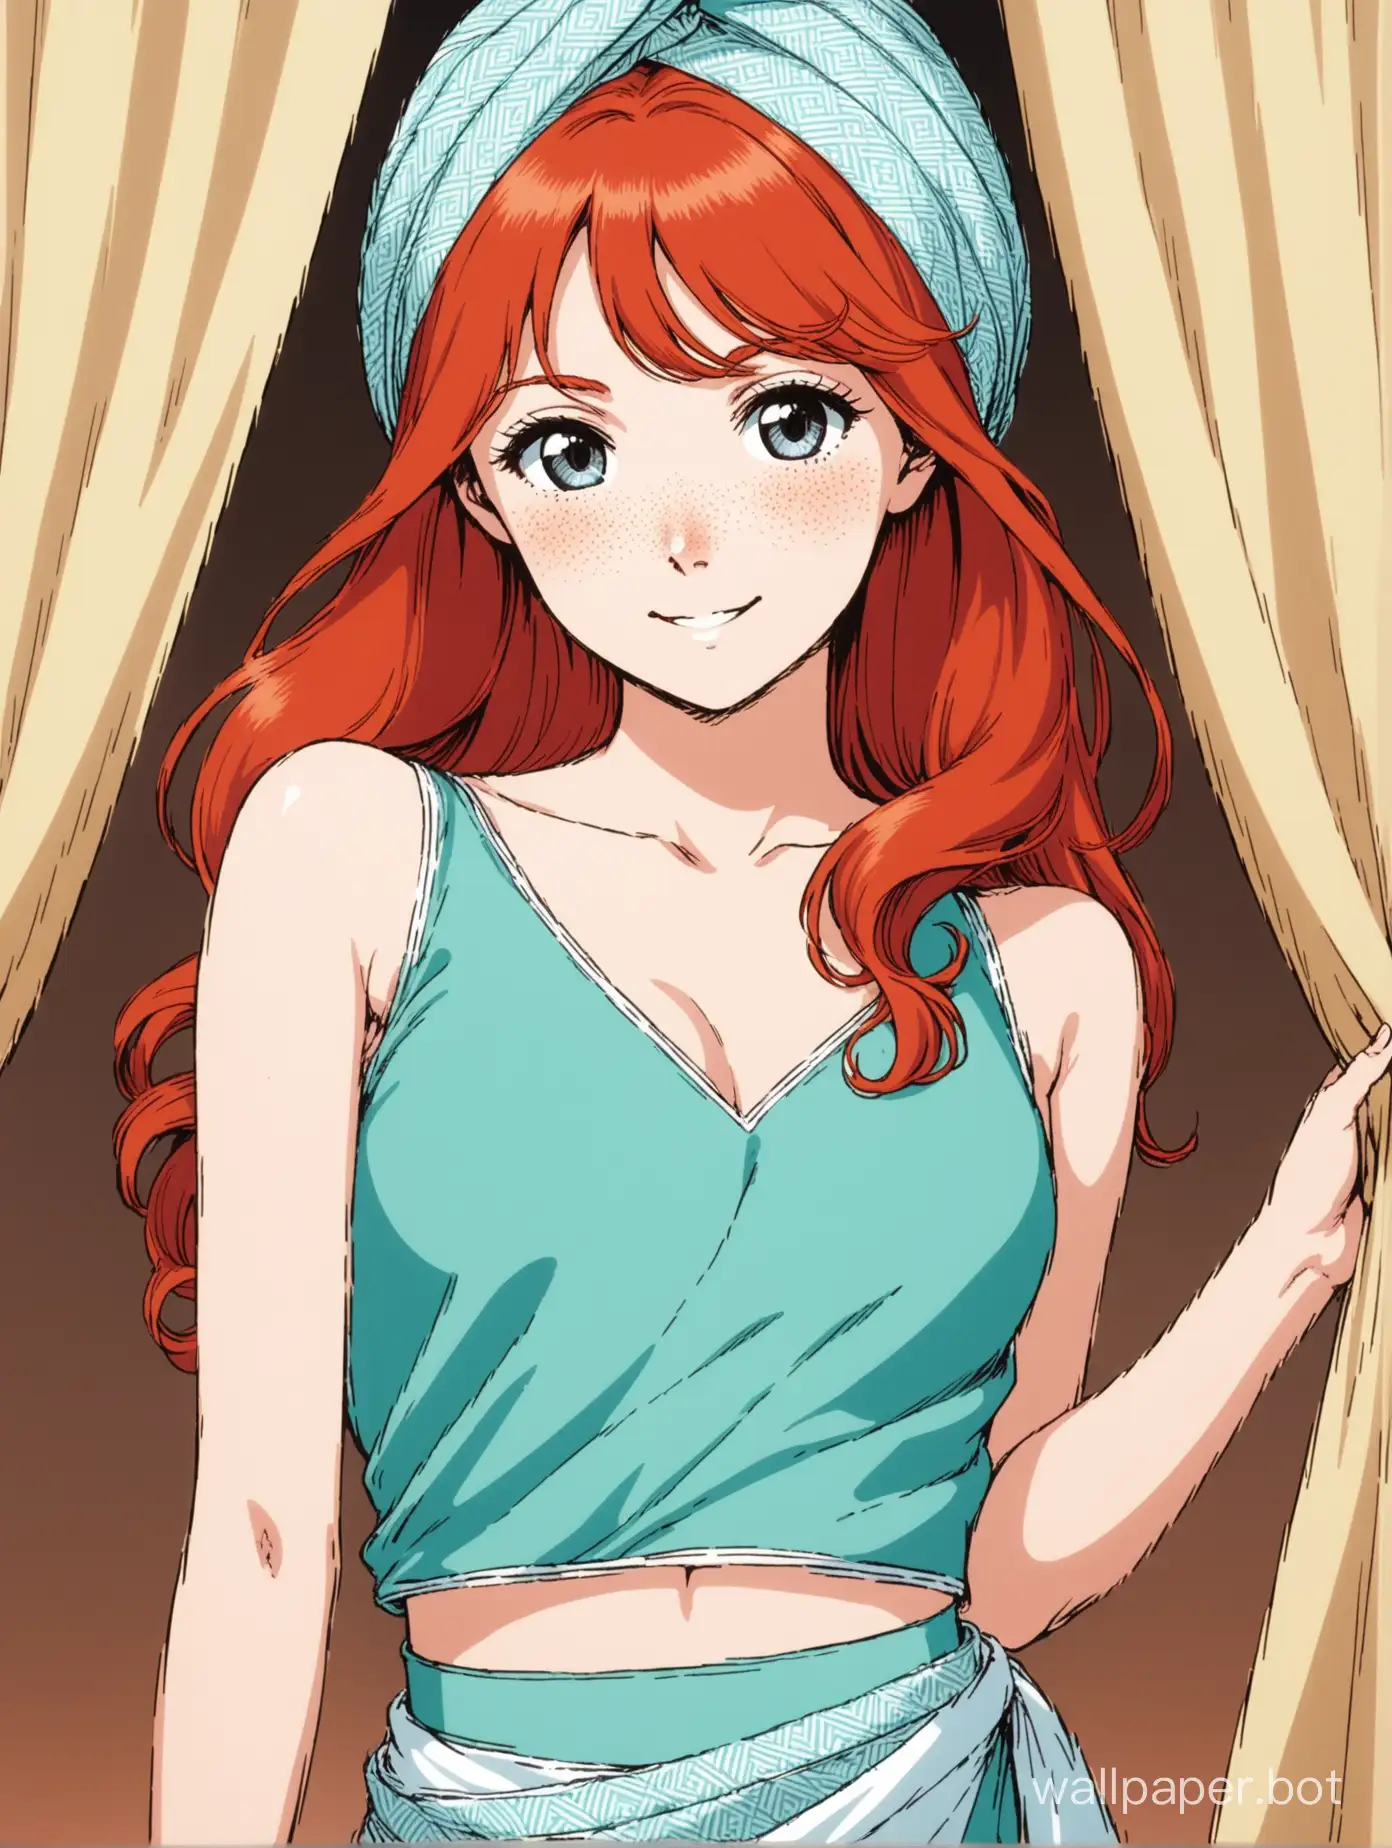 Enchanting-Redhead-Woman-in-1980s-Anime-Style-with-Kufiya-Turban